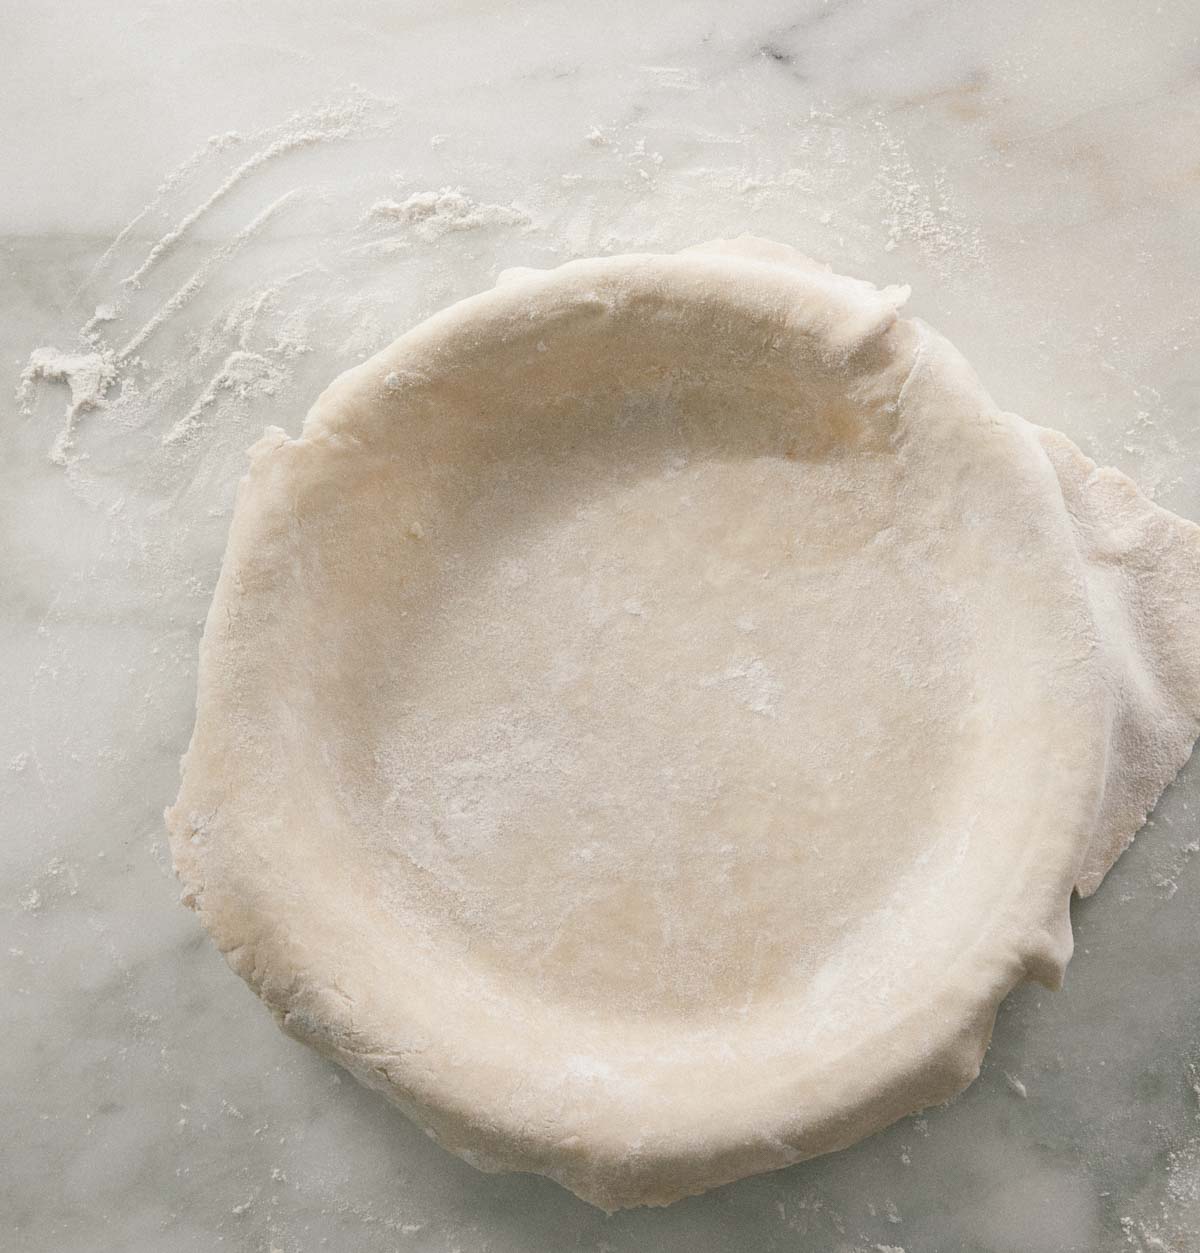 Pie crust in a pie pan. 